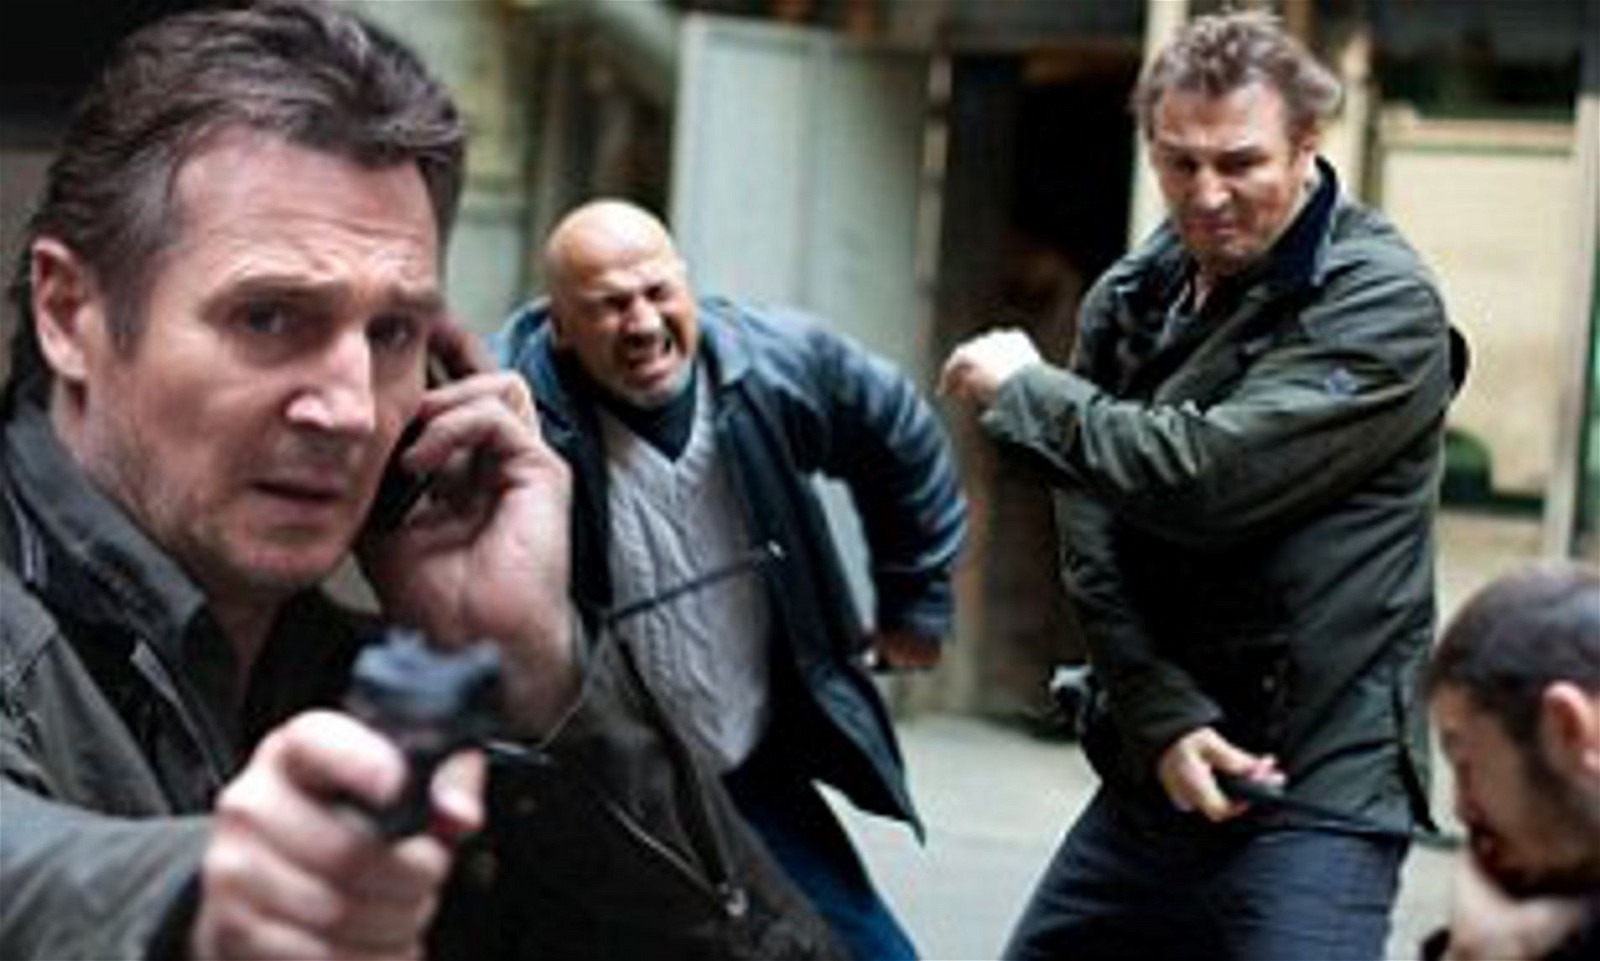 Liam Neeson felt embarrassed over his on-screen kills